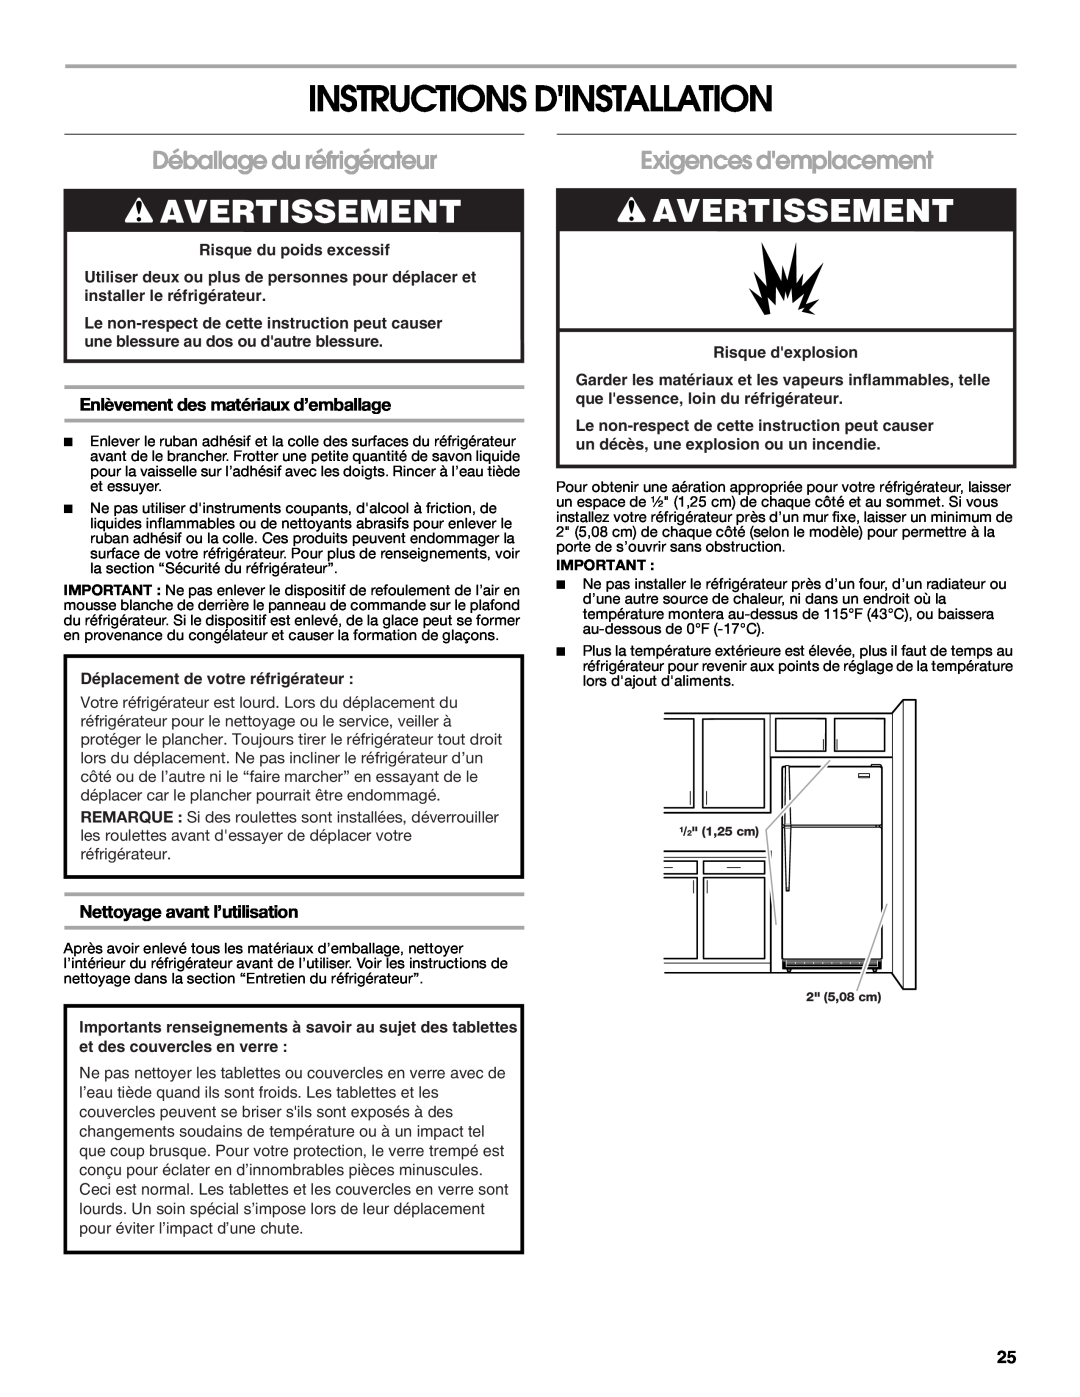 Whirlpool GARAGE REFRIGERATOR manual Instructions Dinstallation, Déballage du réfrigérateur, Exigences demplacement 